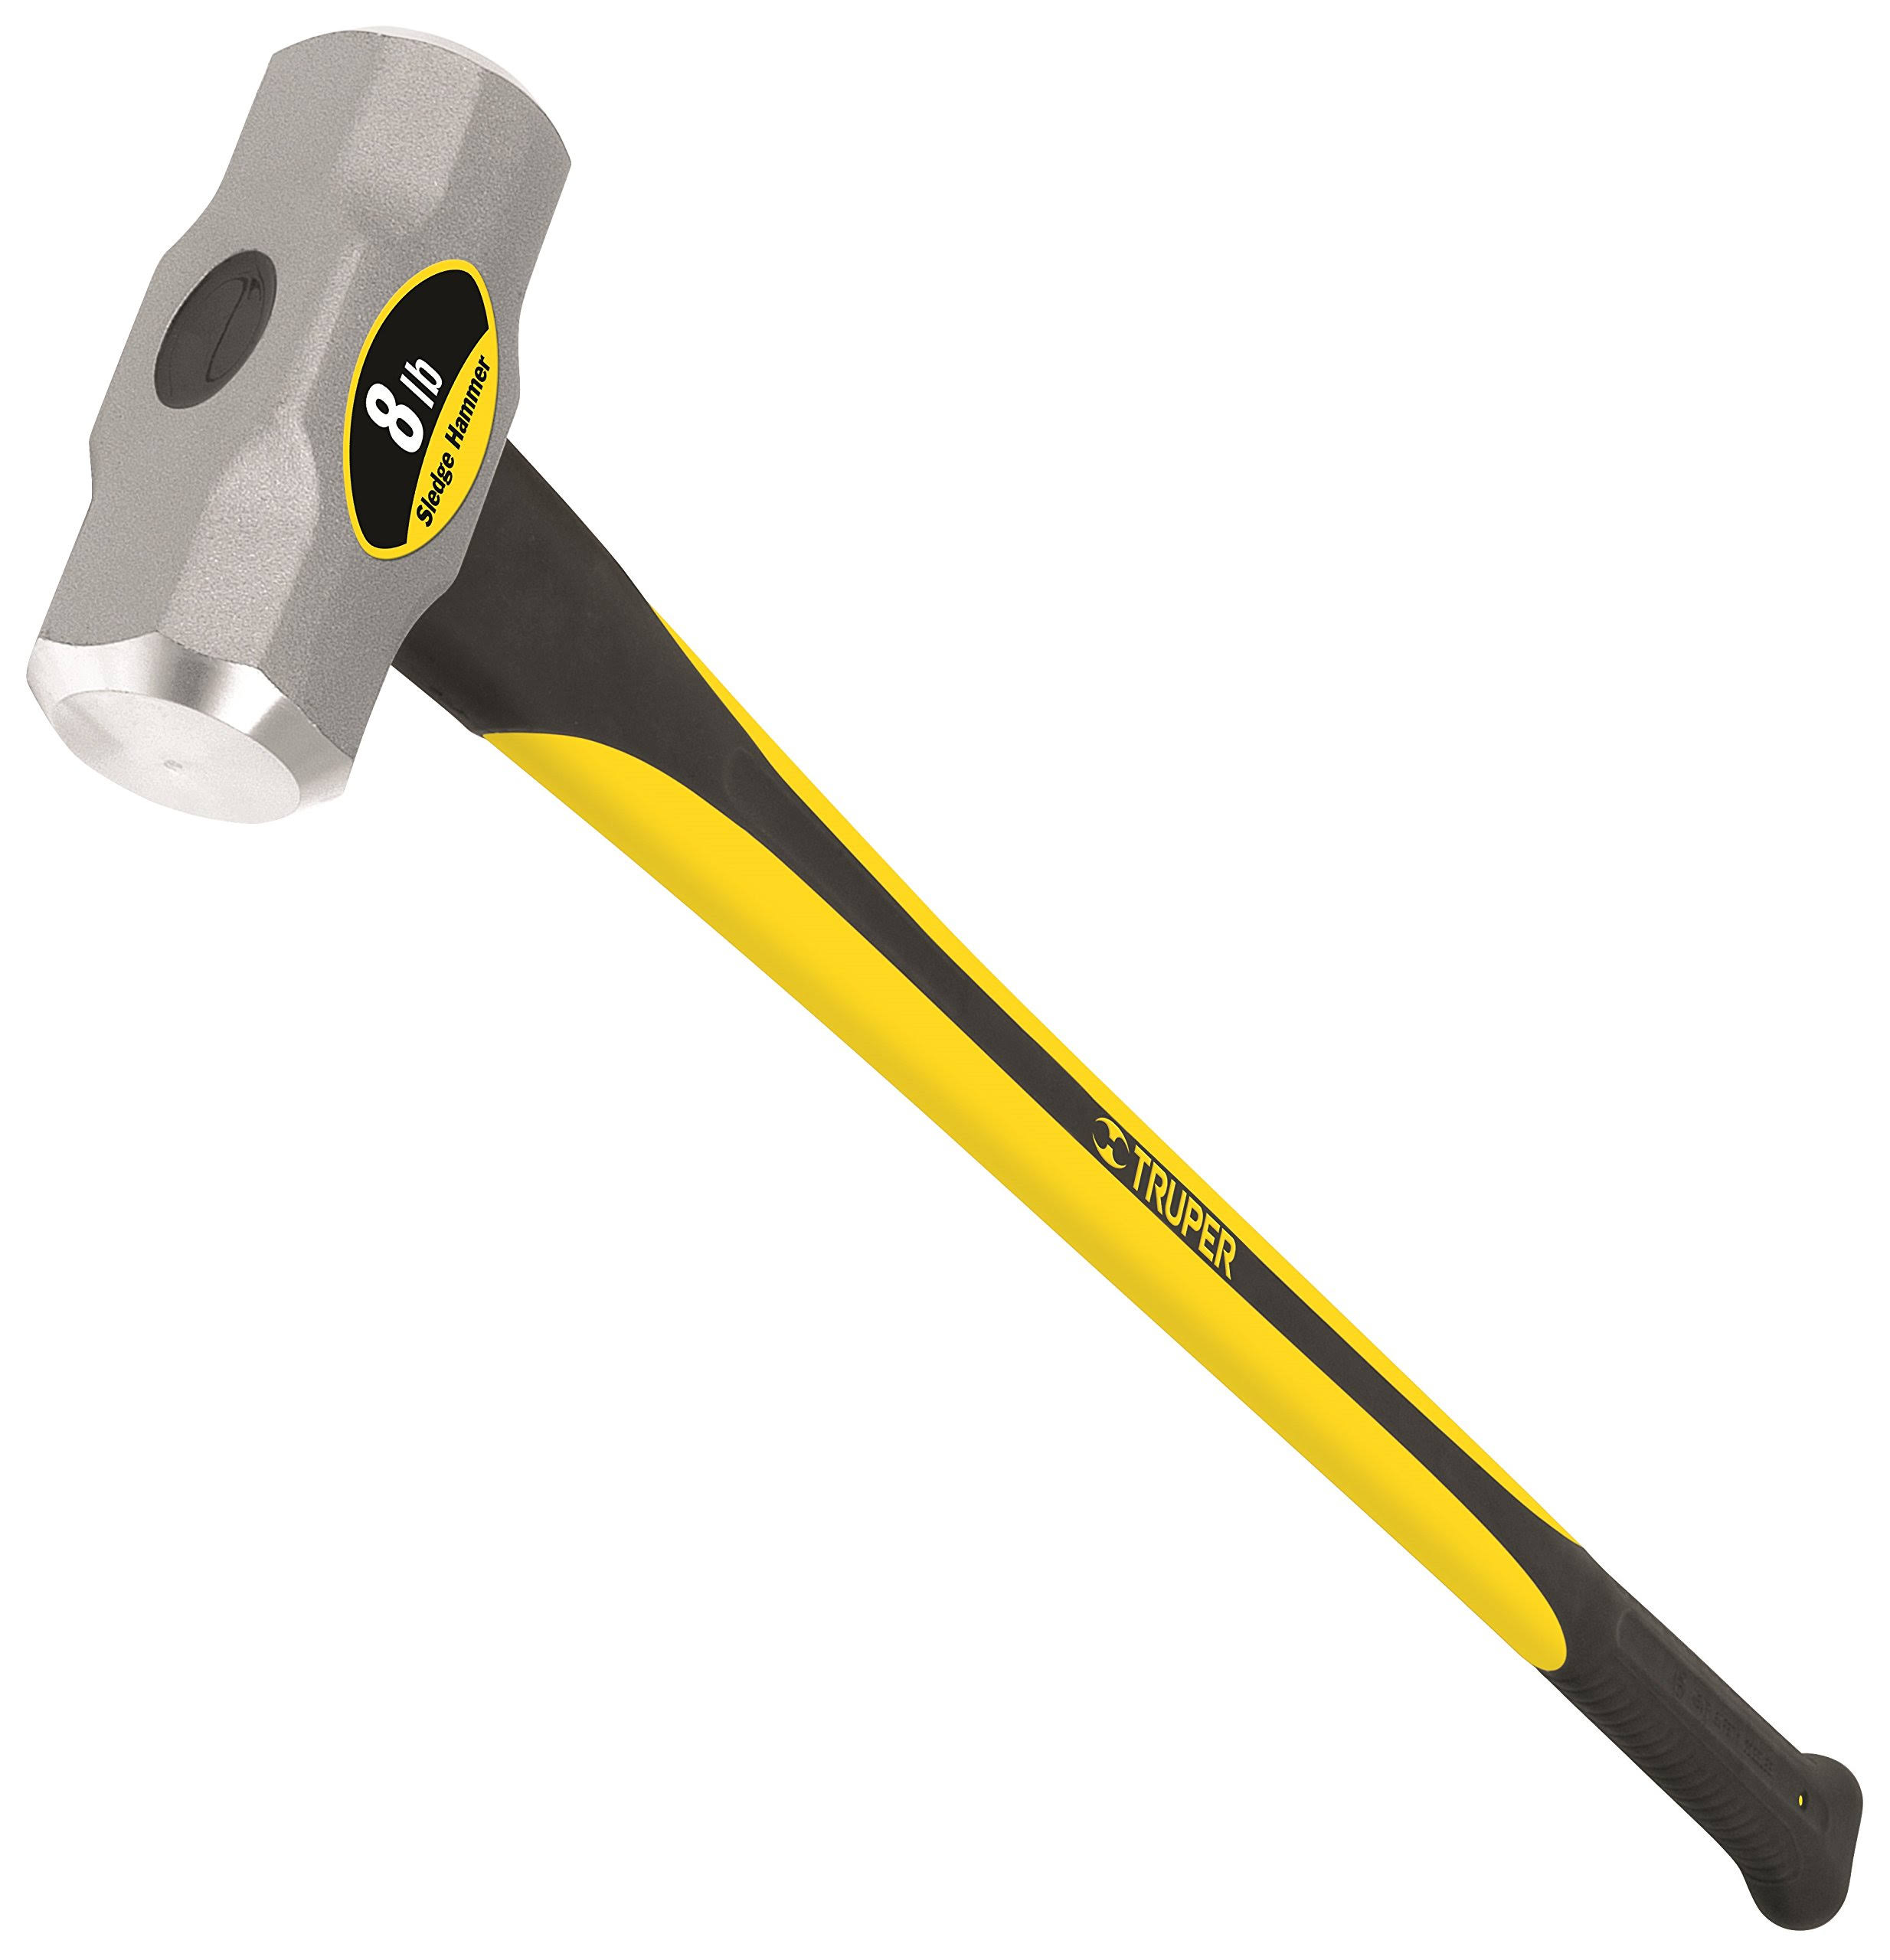 Truper 30929 Fiberglass Handle Sledge Hammer - 8 lb, 36 in